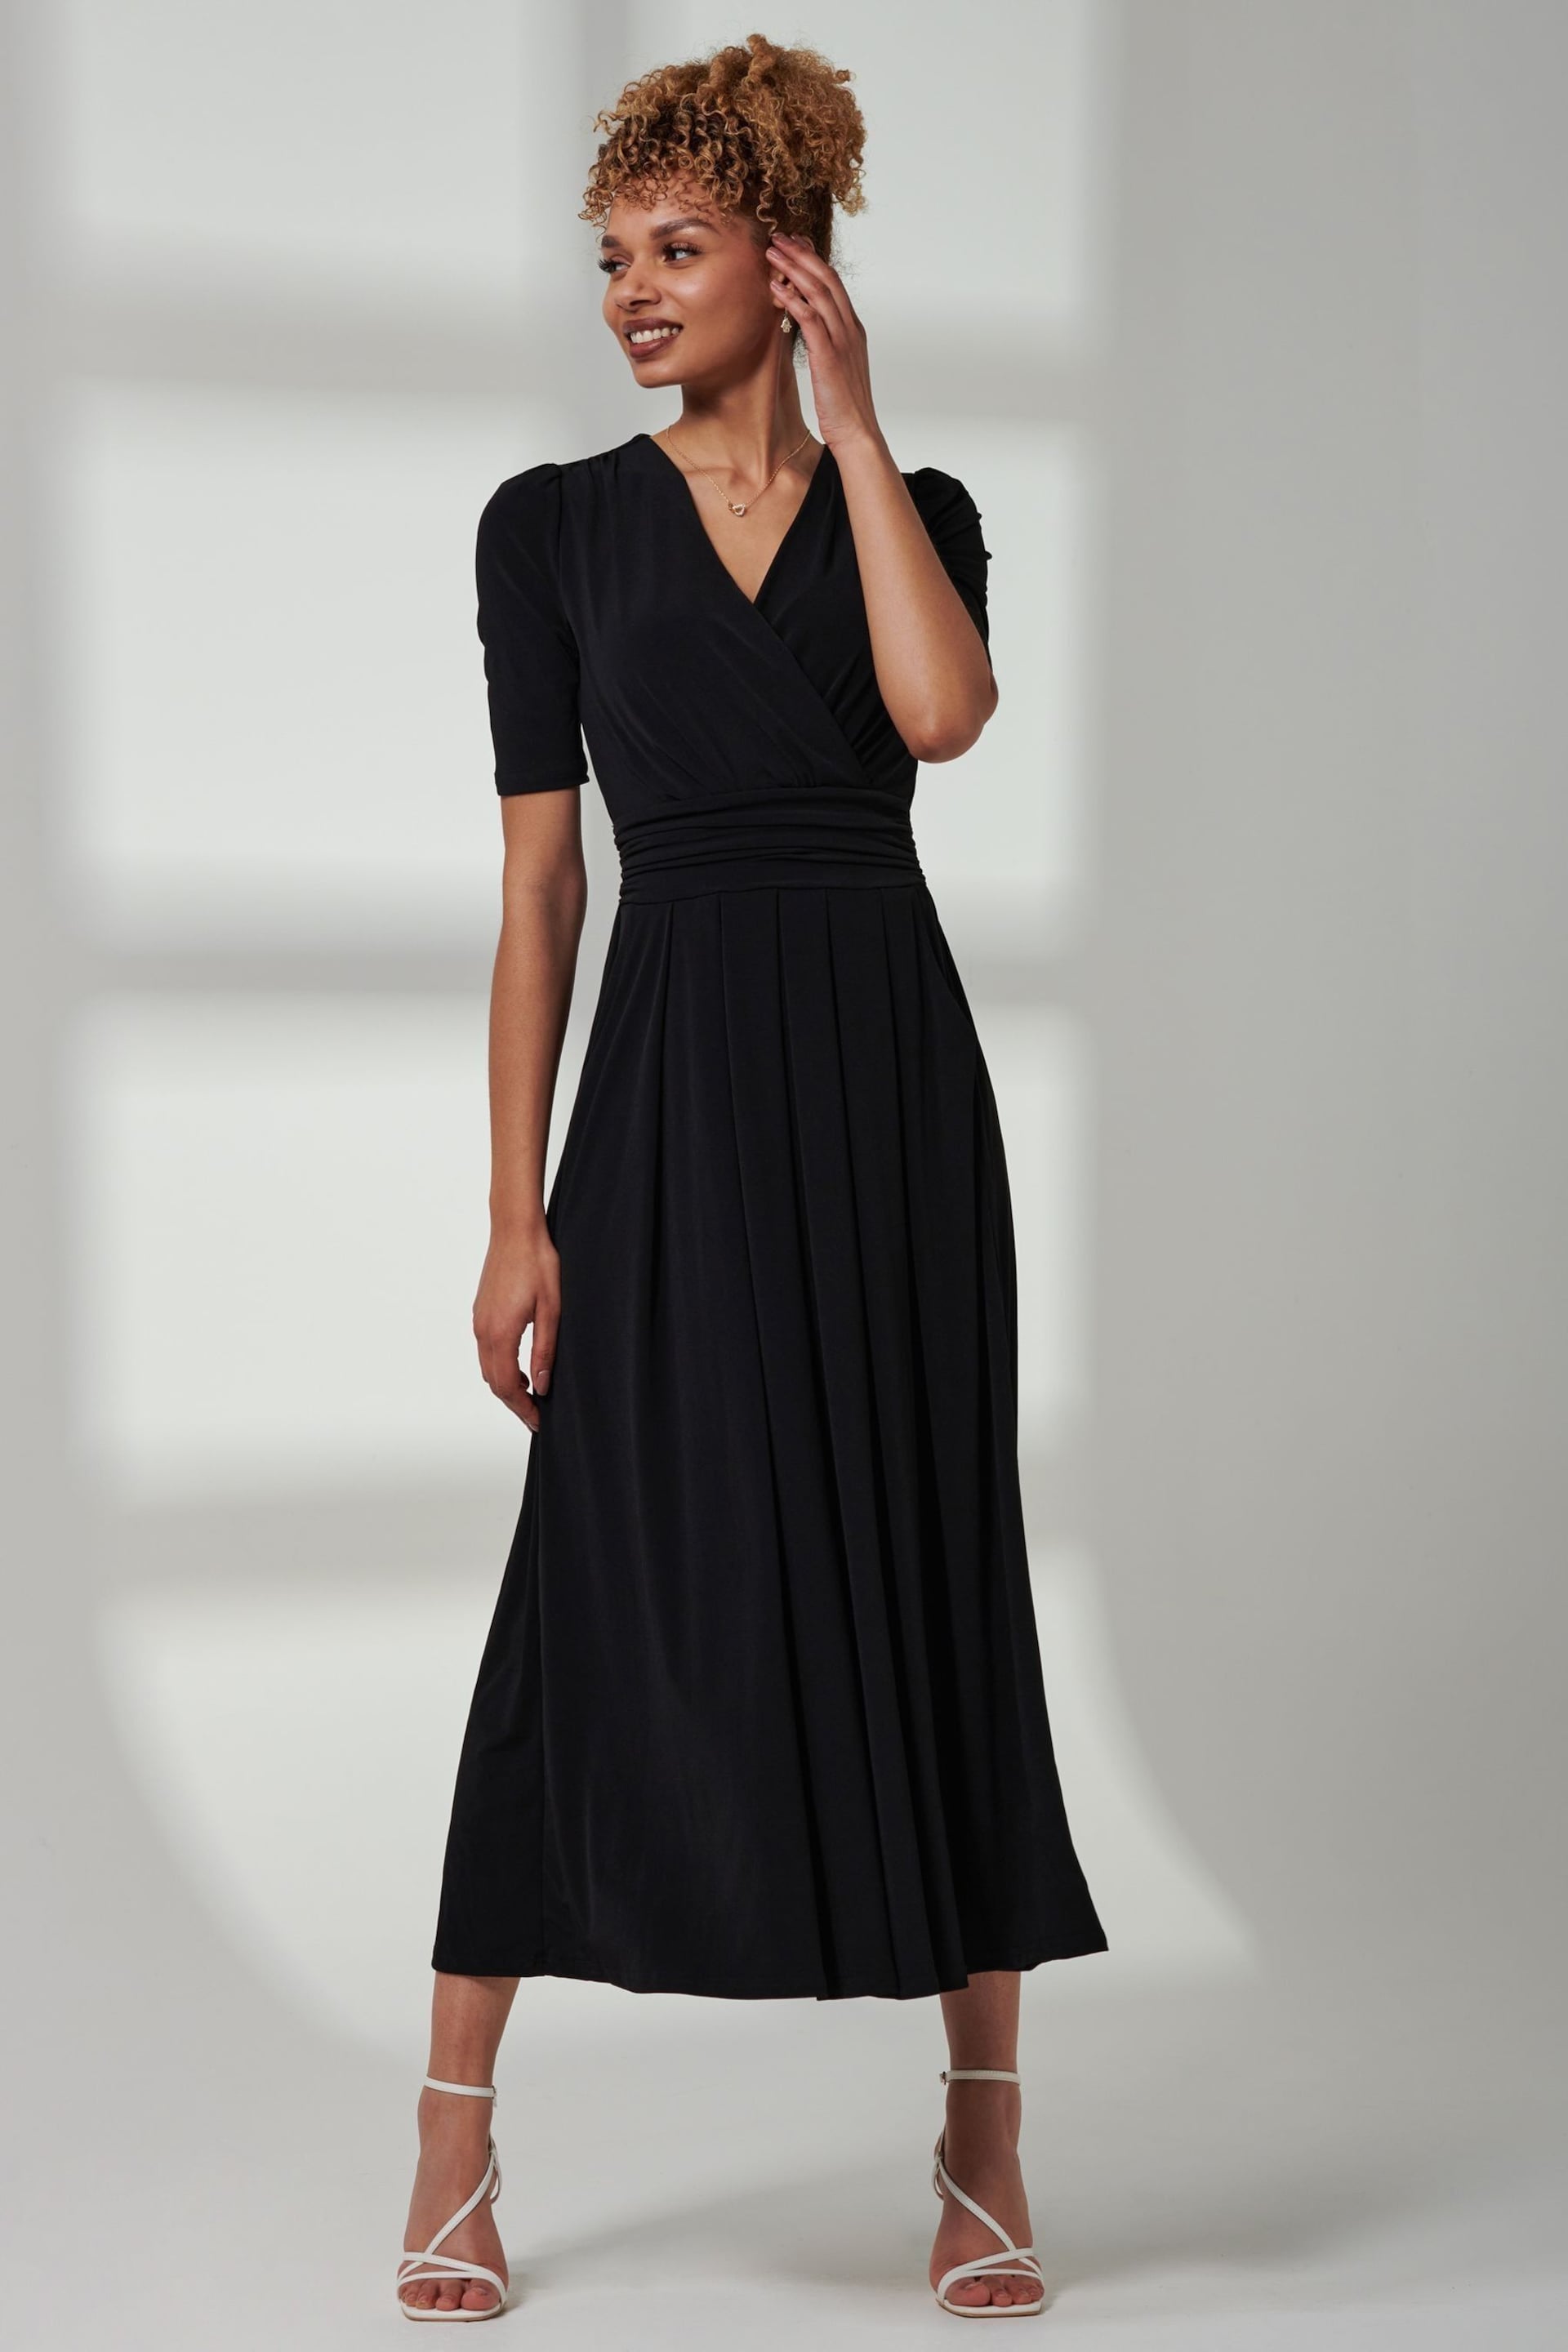 Jolie Moi Black Bree Half Sleeve Jersey Maxi Dress - Image 6 of 6